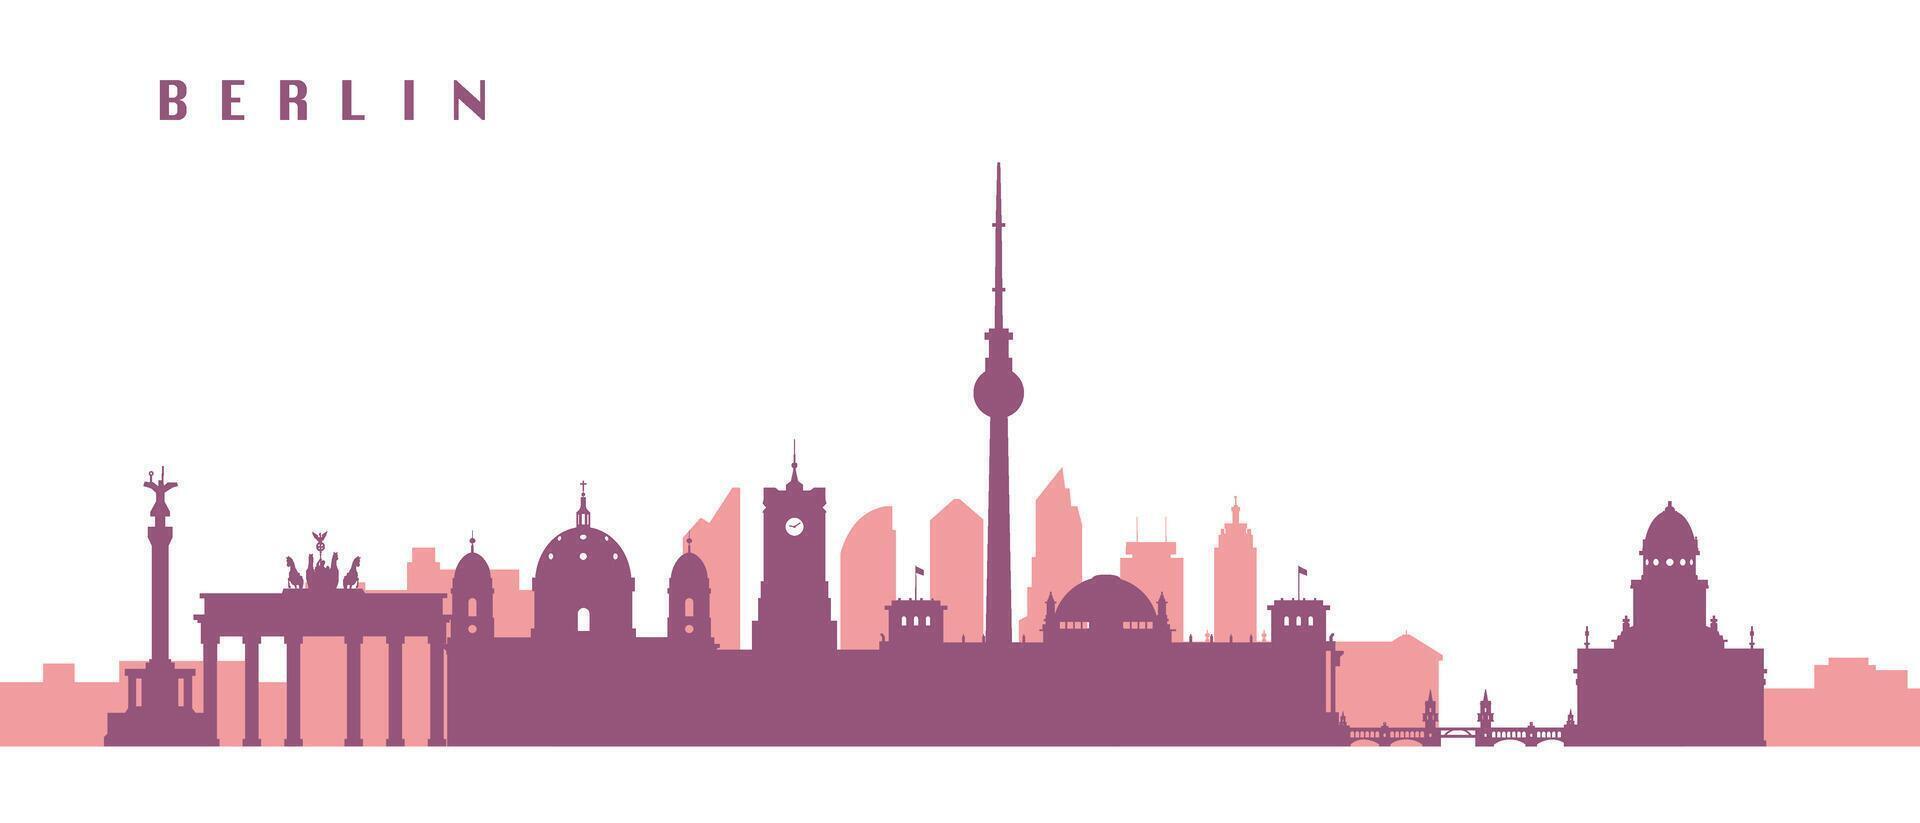 Berlin City Skyline Silhouettes vector